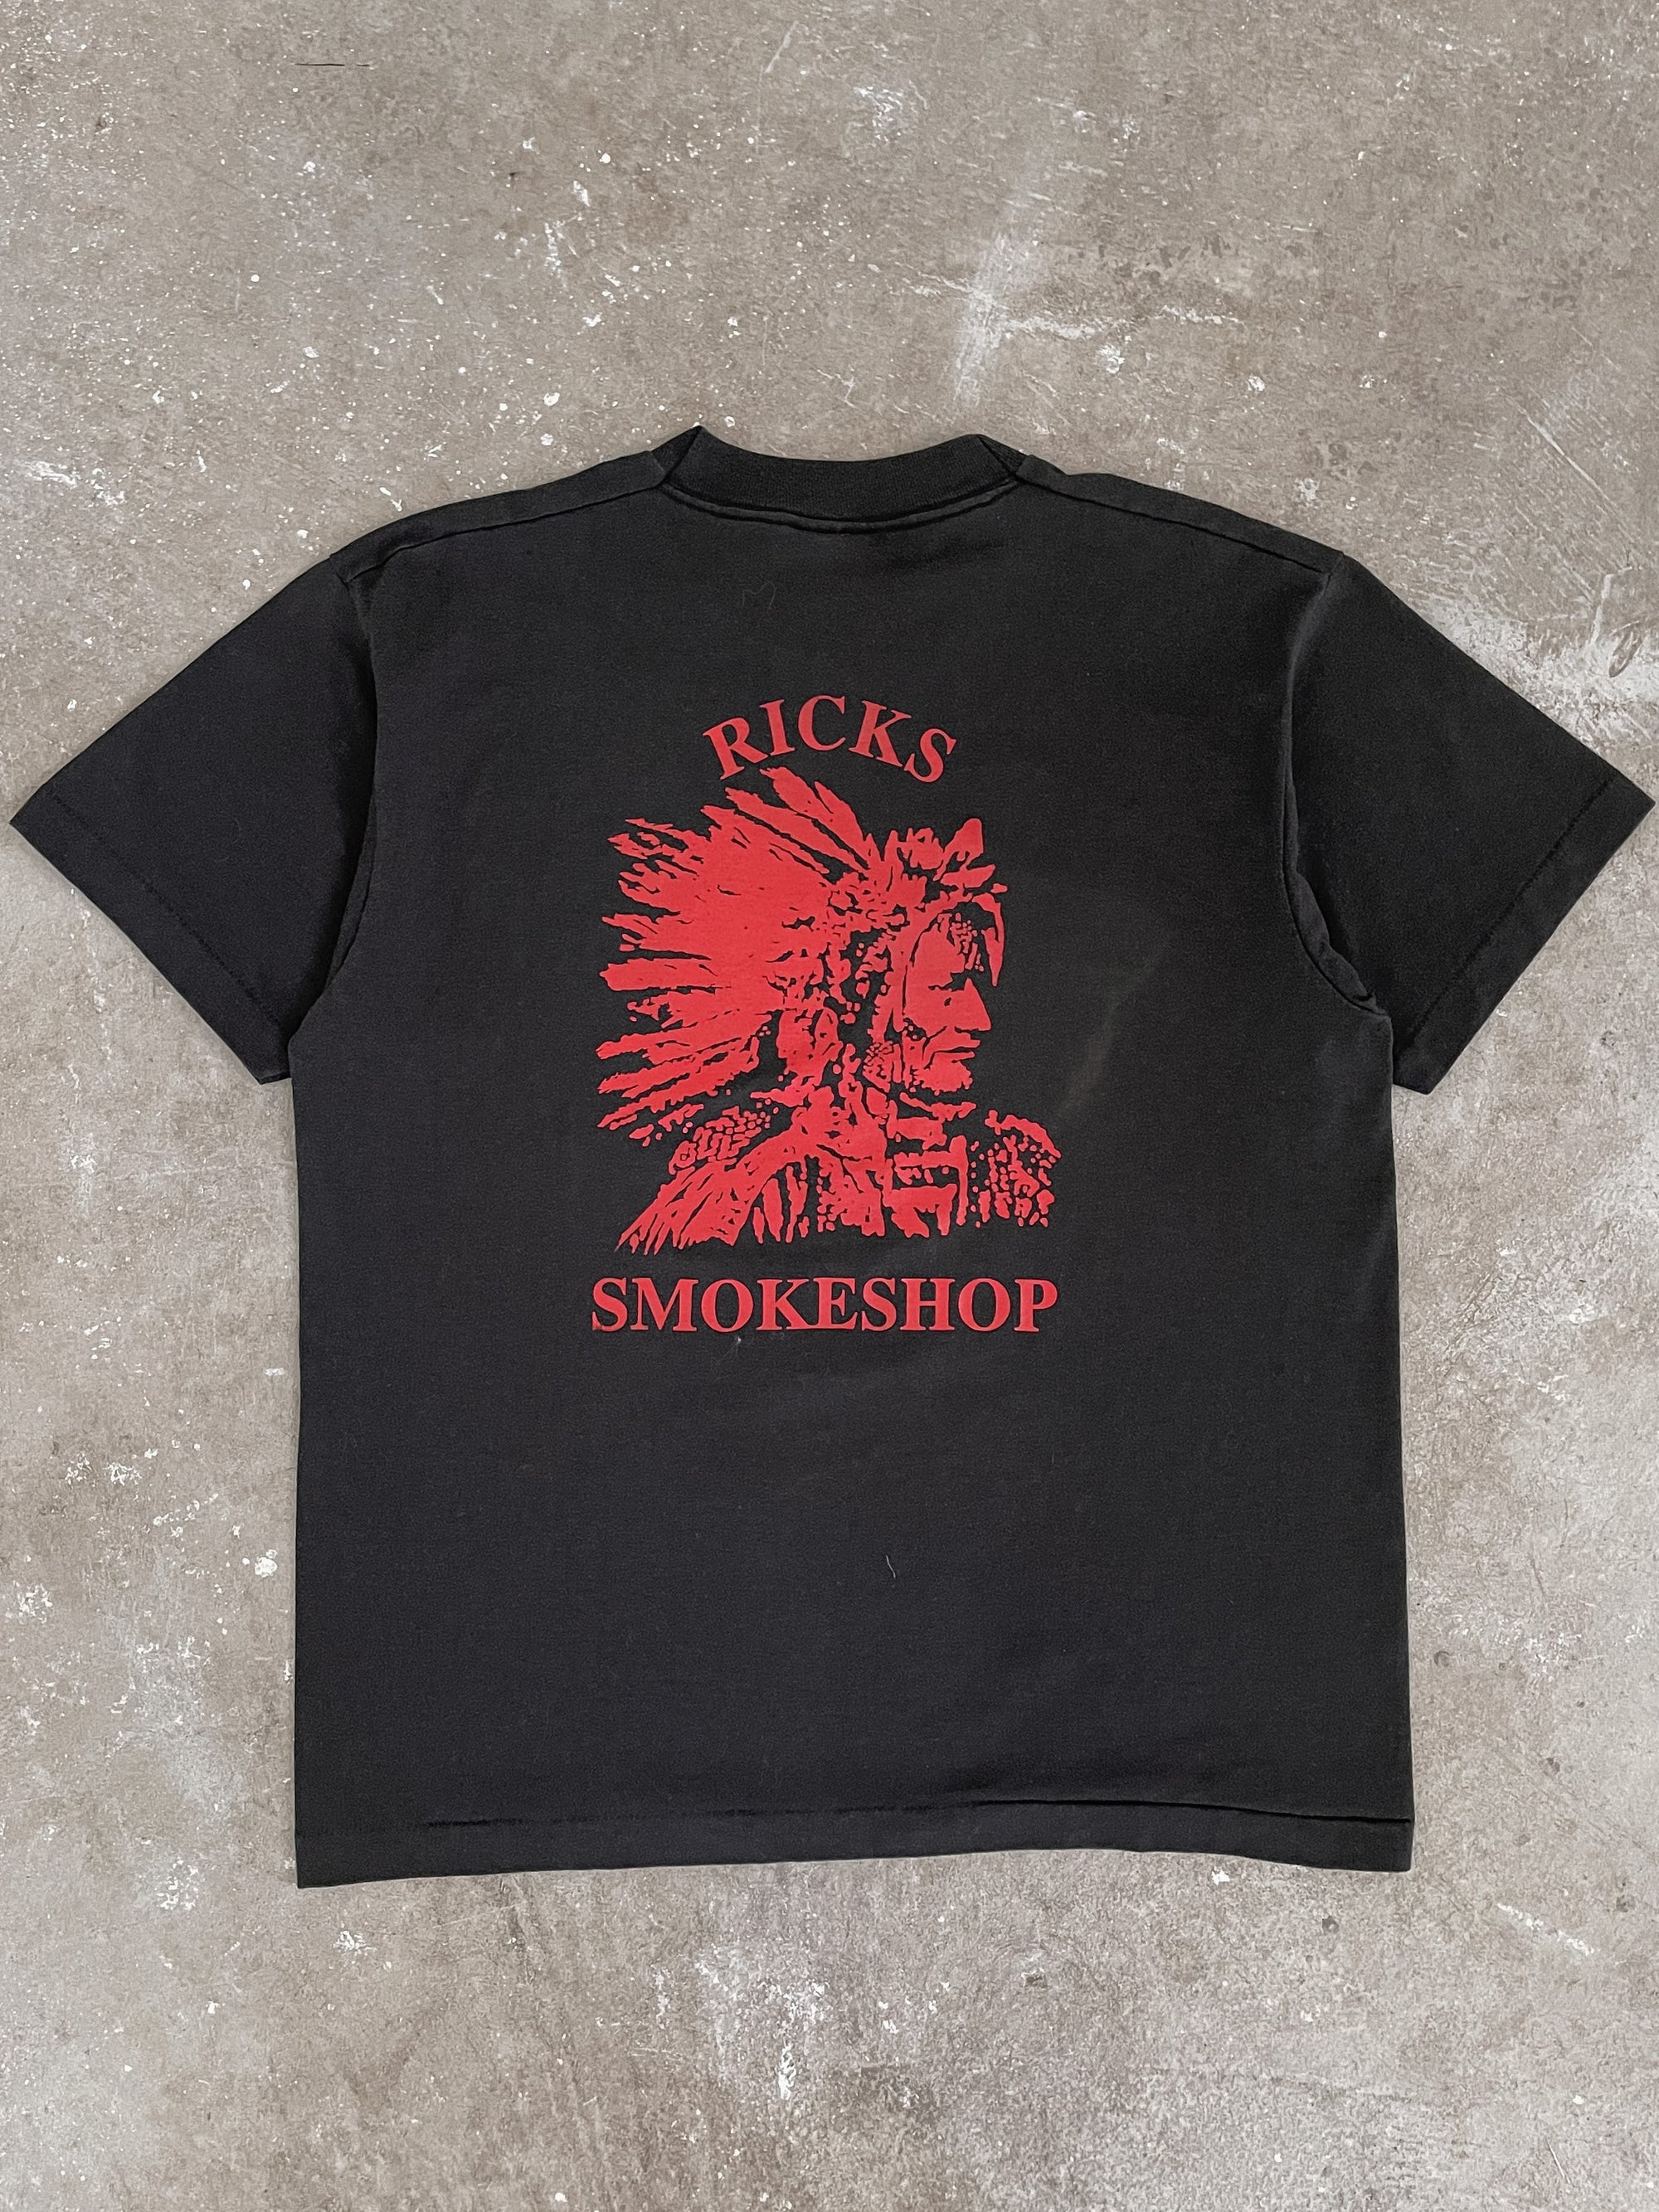 1990s “Ricks Smoke Shop” Single Stitched Tee (L)